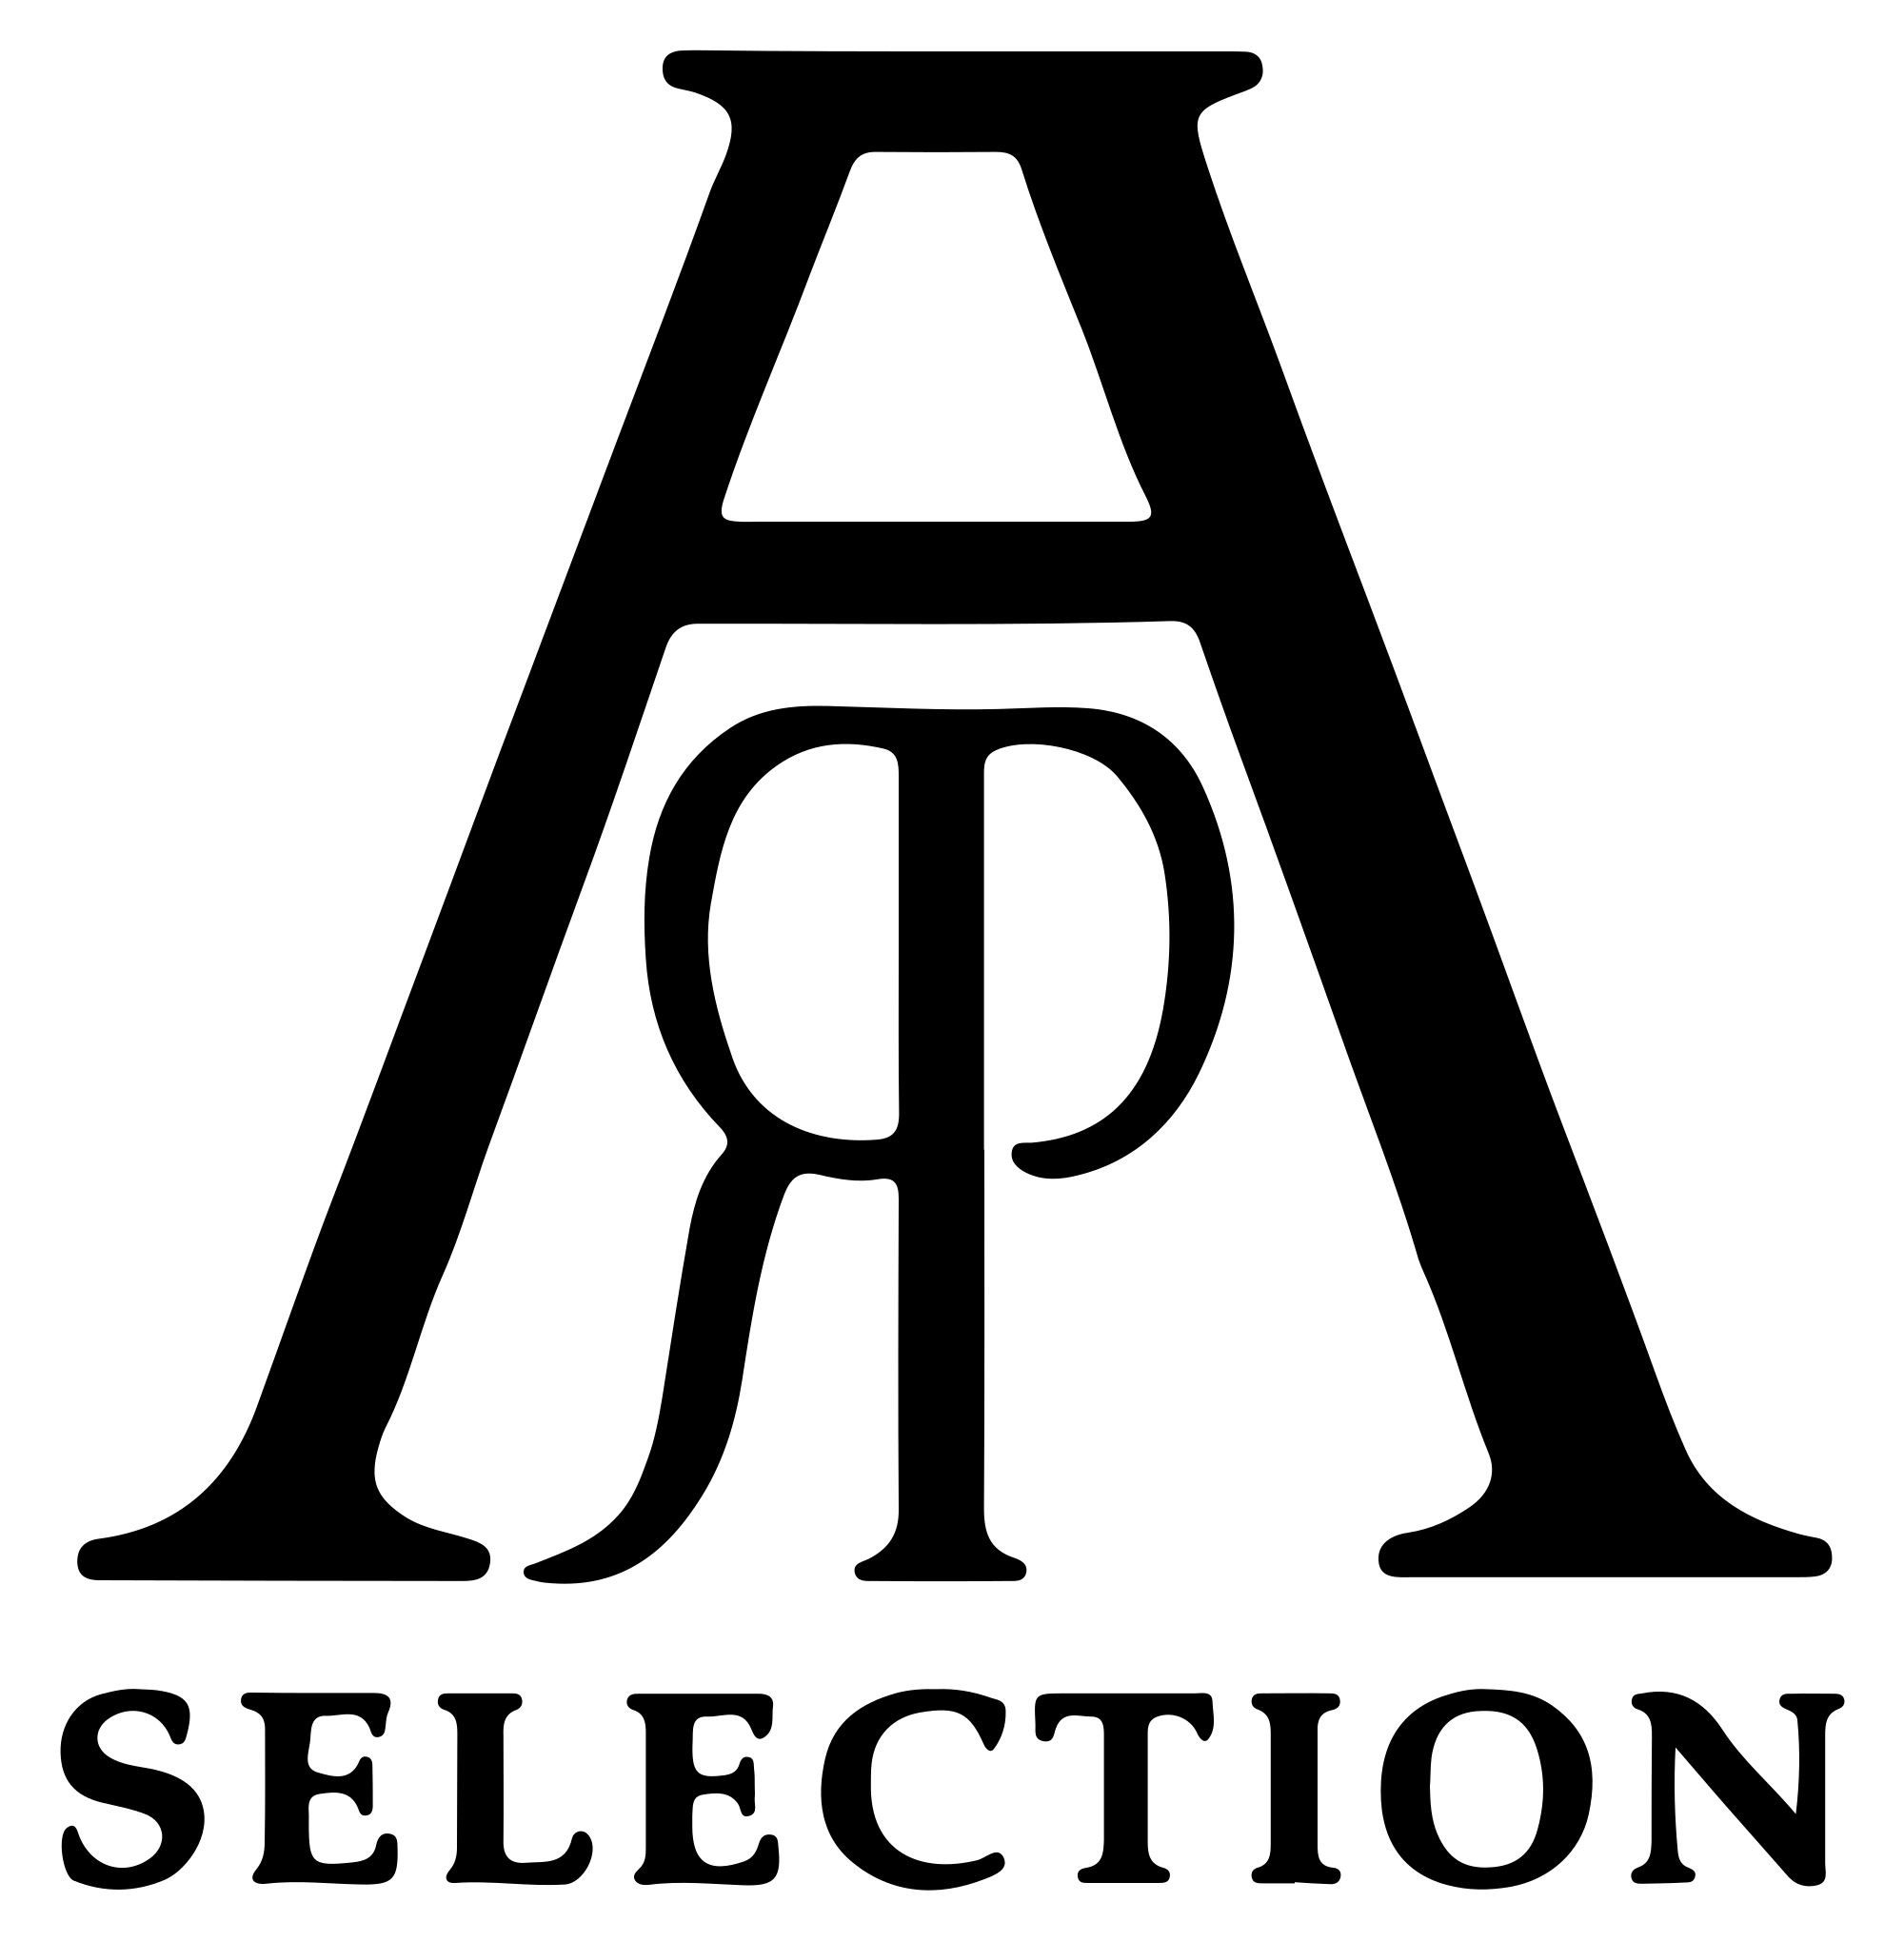 ARP Sélection Logo